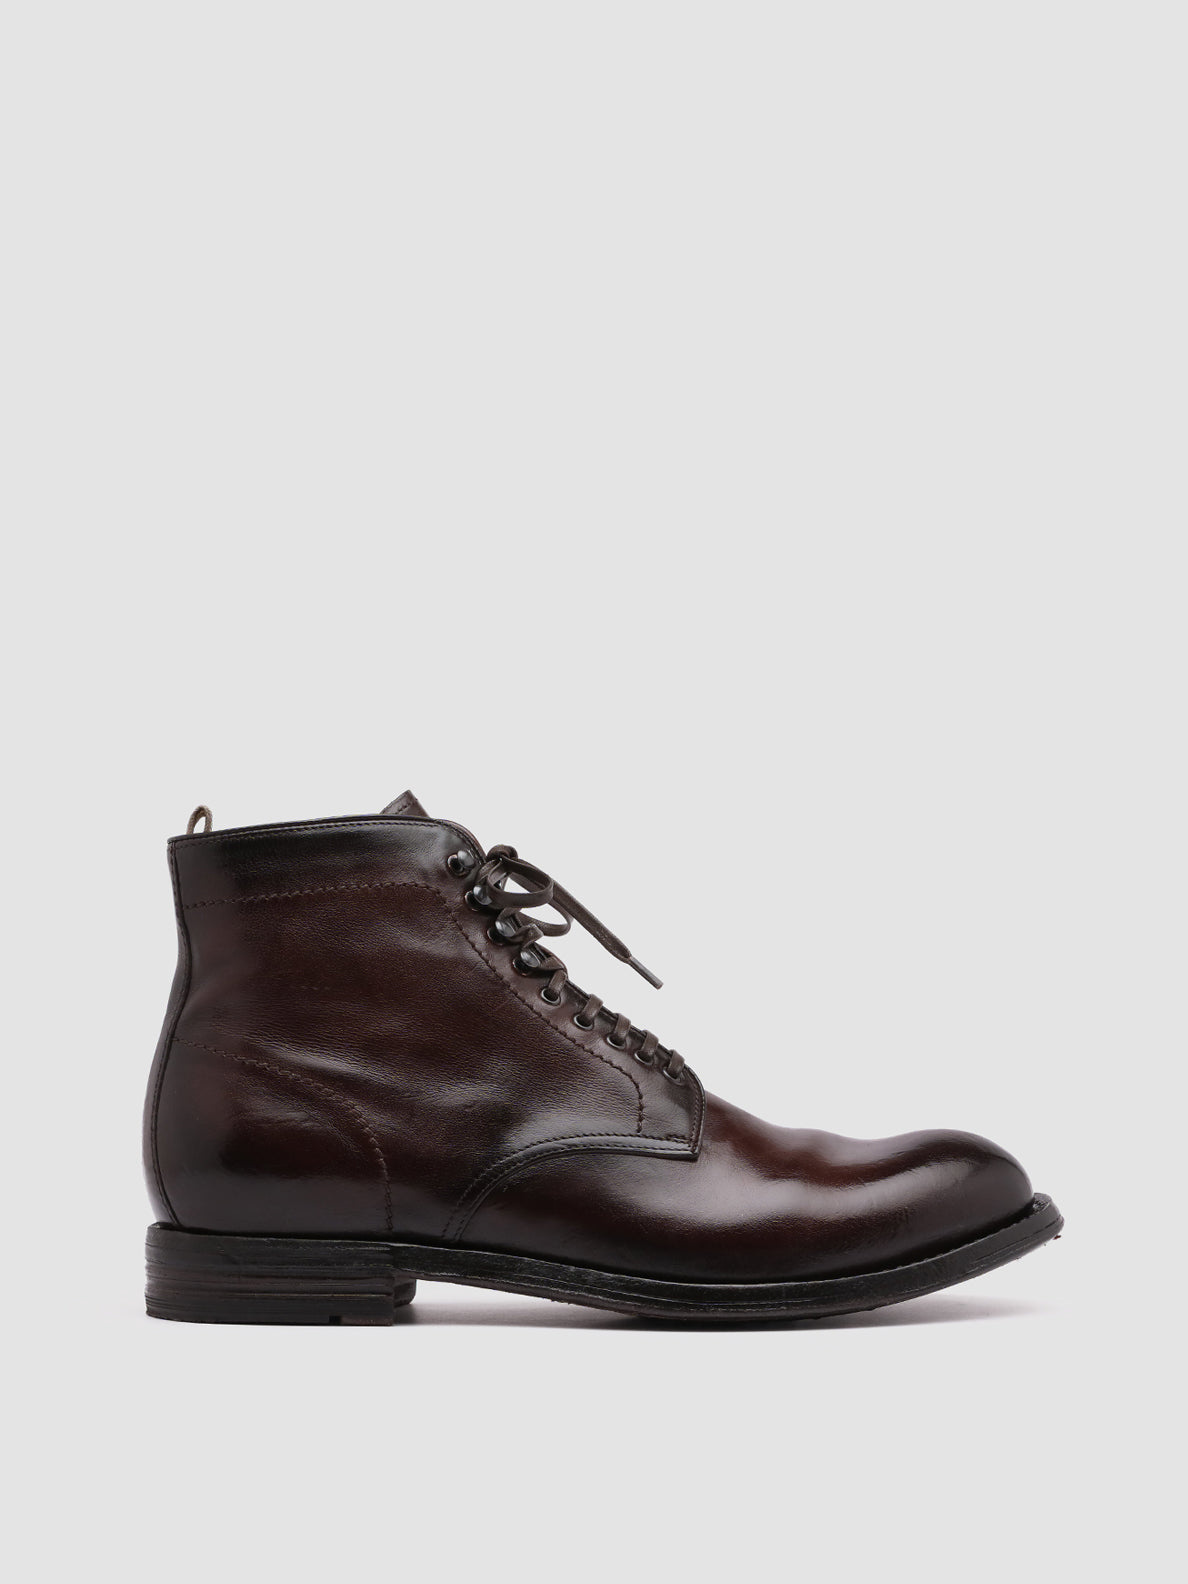 Men's Brown Leather Boots BALANCE 003 – Officine Creative EU